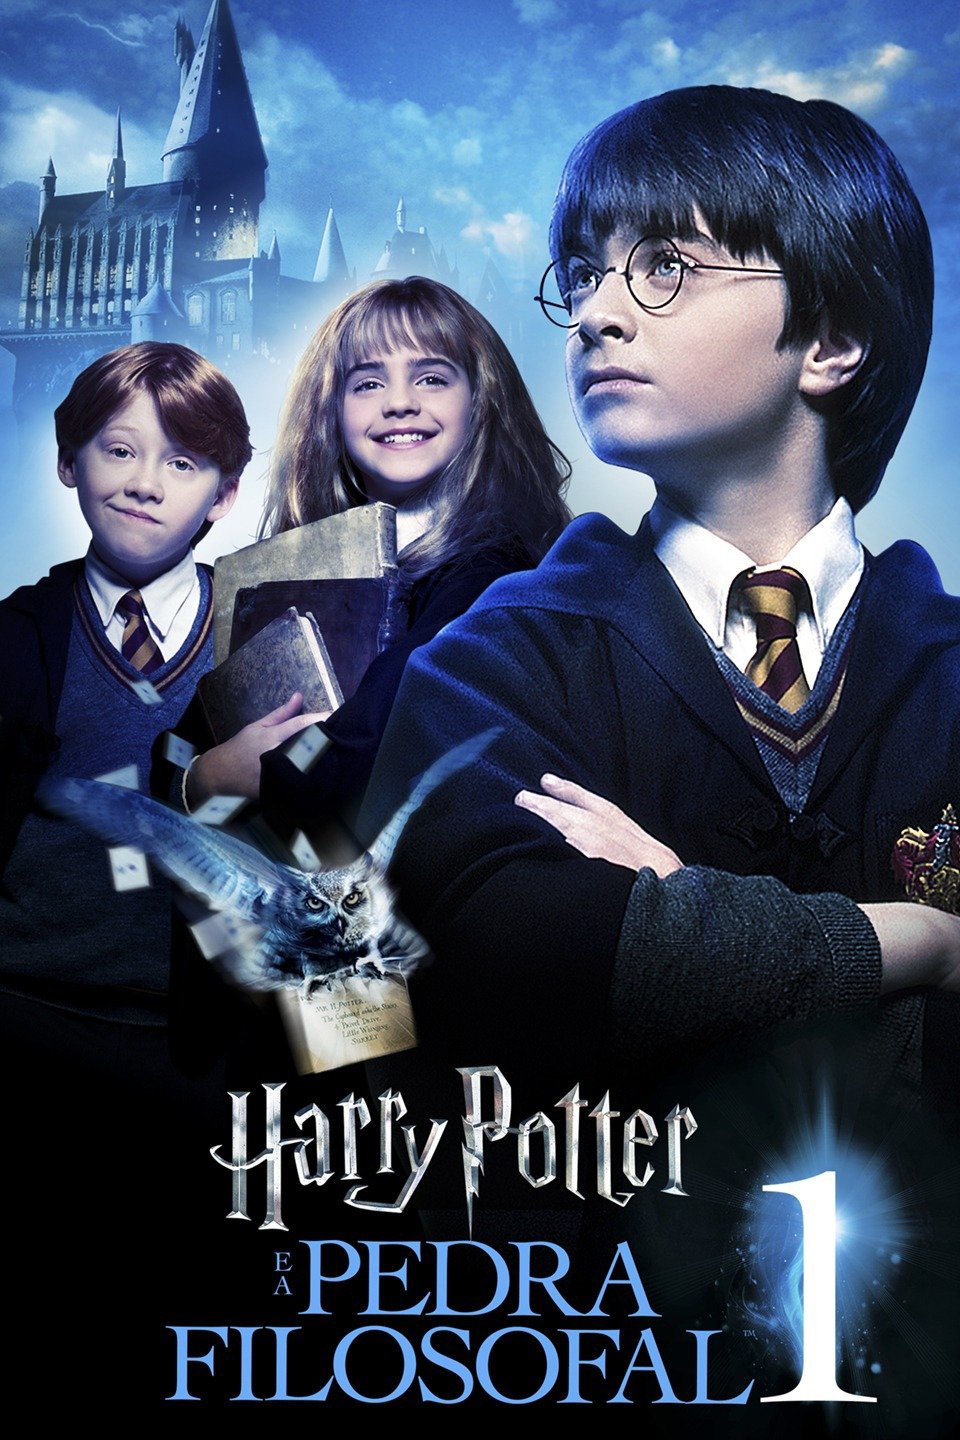 Harry Potter e a Pedra Filosofal Online | Claro tv+